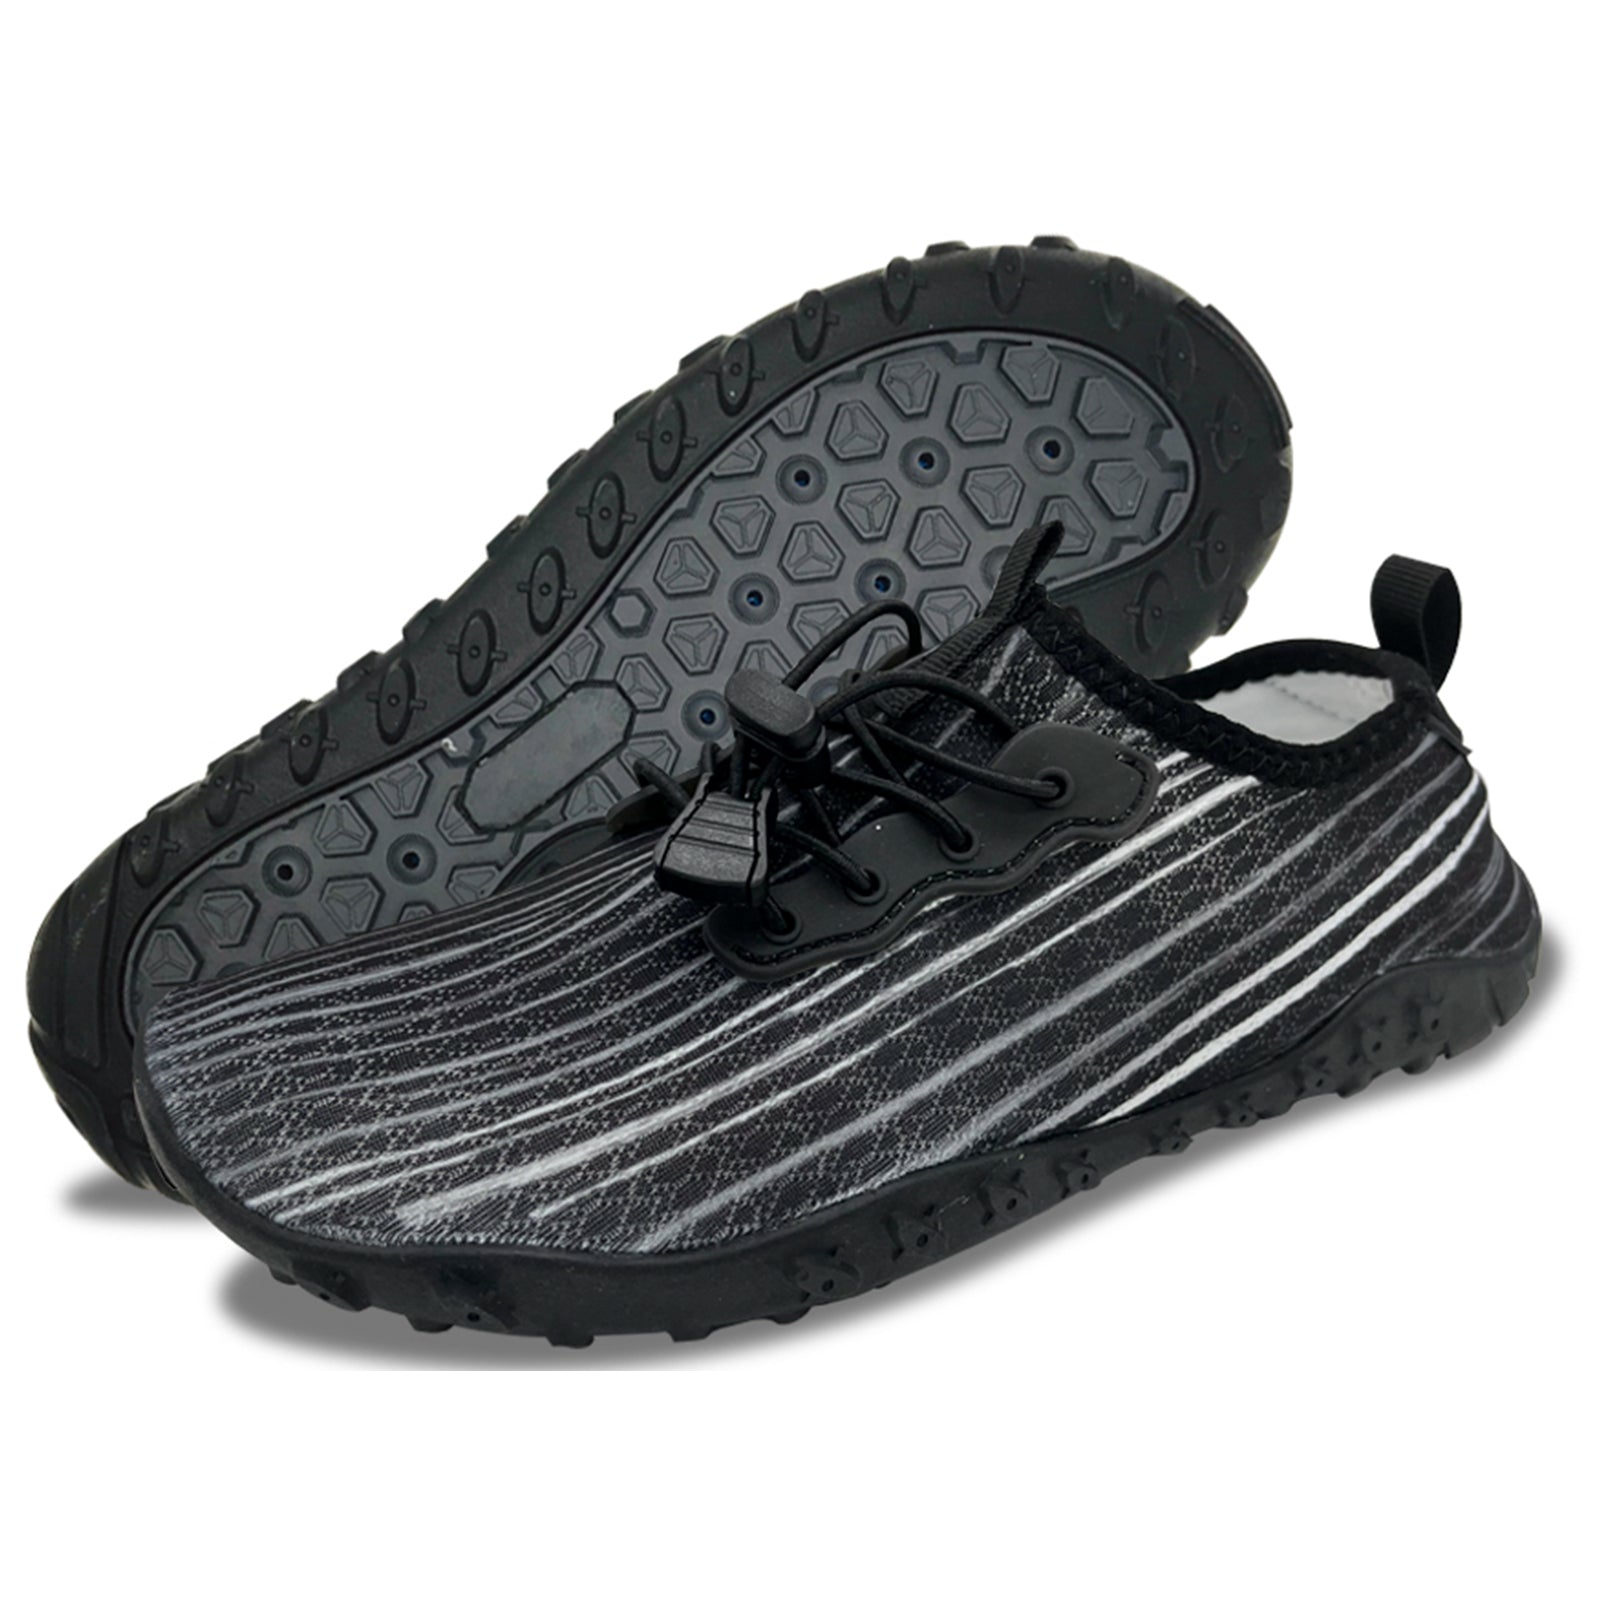 Water Shoes for Men and Women Soft Breathable Slip-on Aqua Shoes Aqua Socks for Swim Beach Pool Surf Yoga (Black Size US 9)